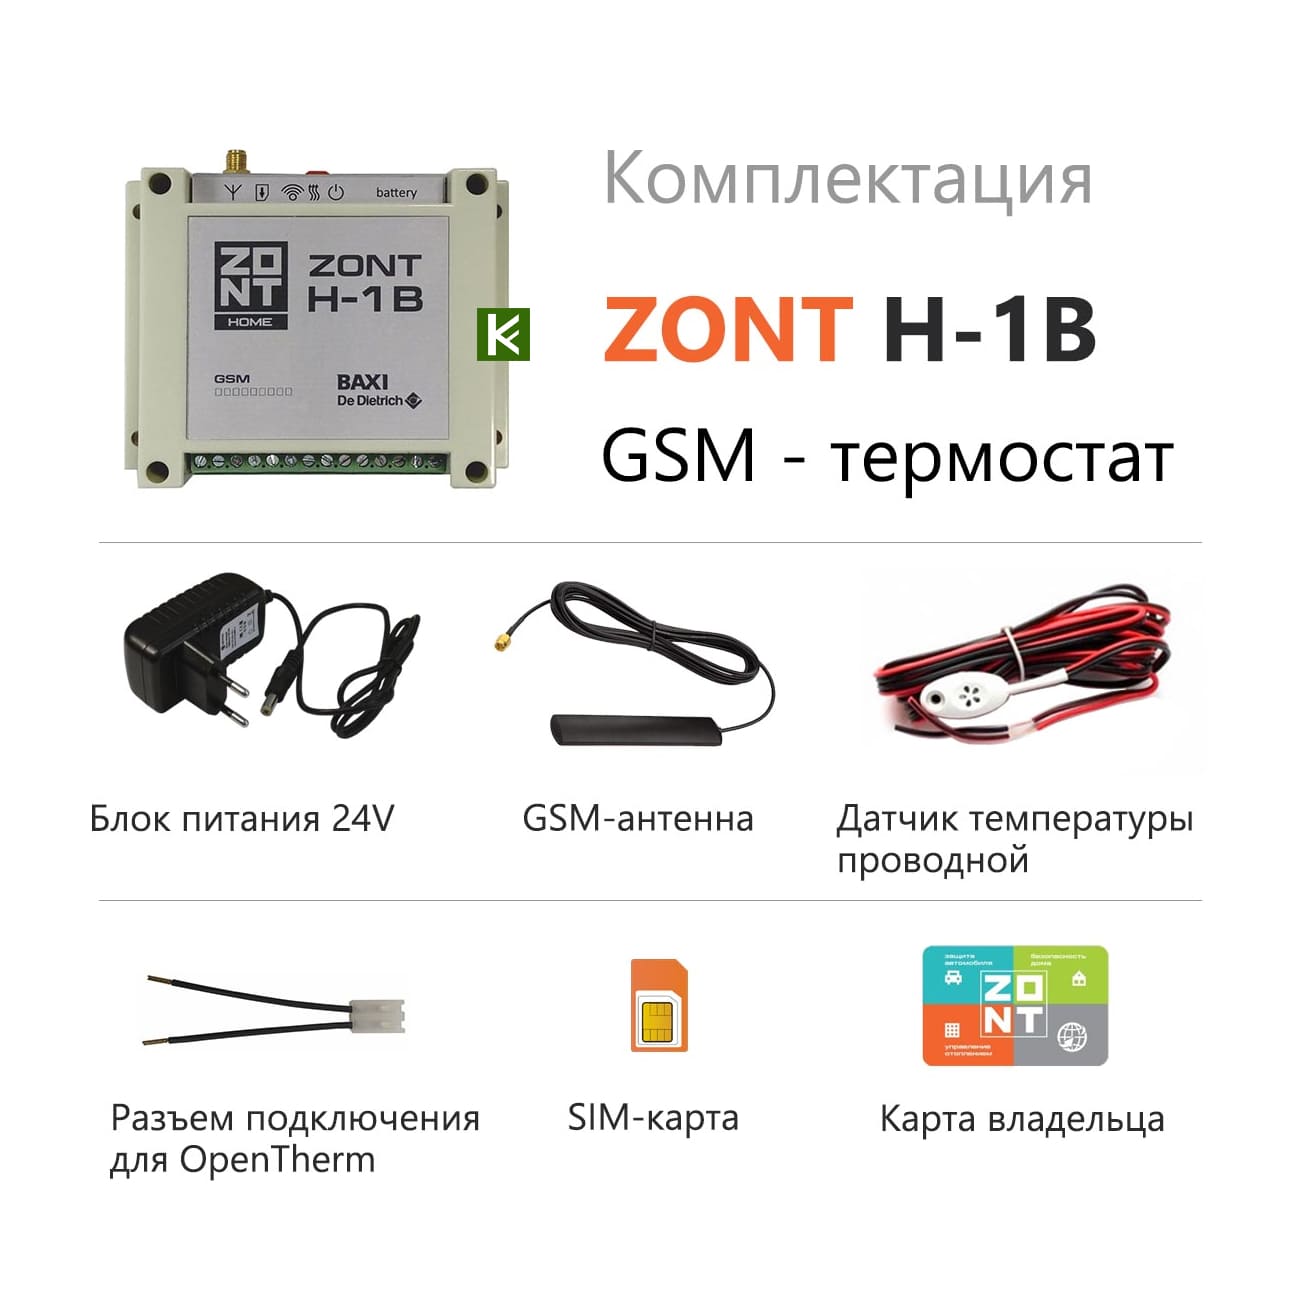 Zont baxi подключение. Zont h-1v Baxi OPENTHERM. GSM Zont h-1v. Система удаленного управления котлом Zont-h1b Baxi. Zont h-1 контроллер.